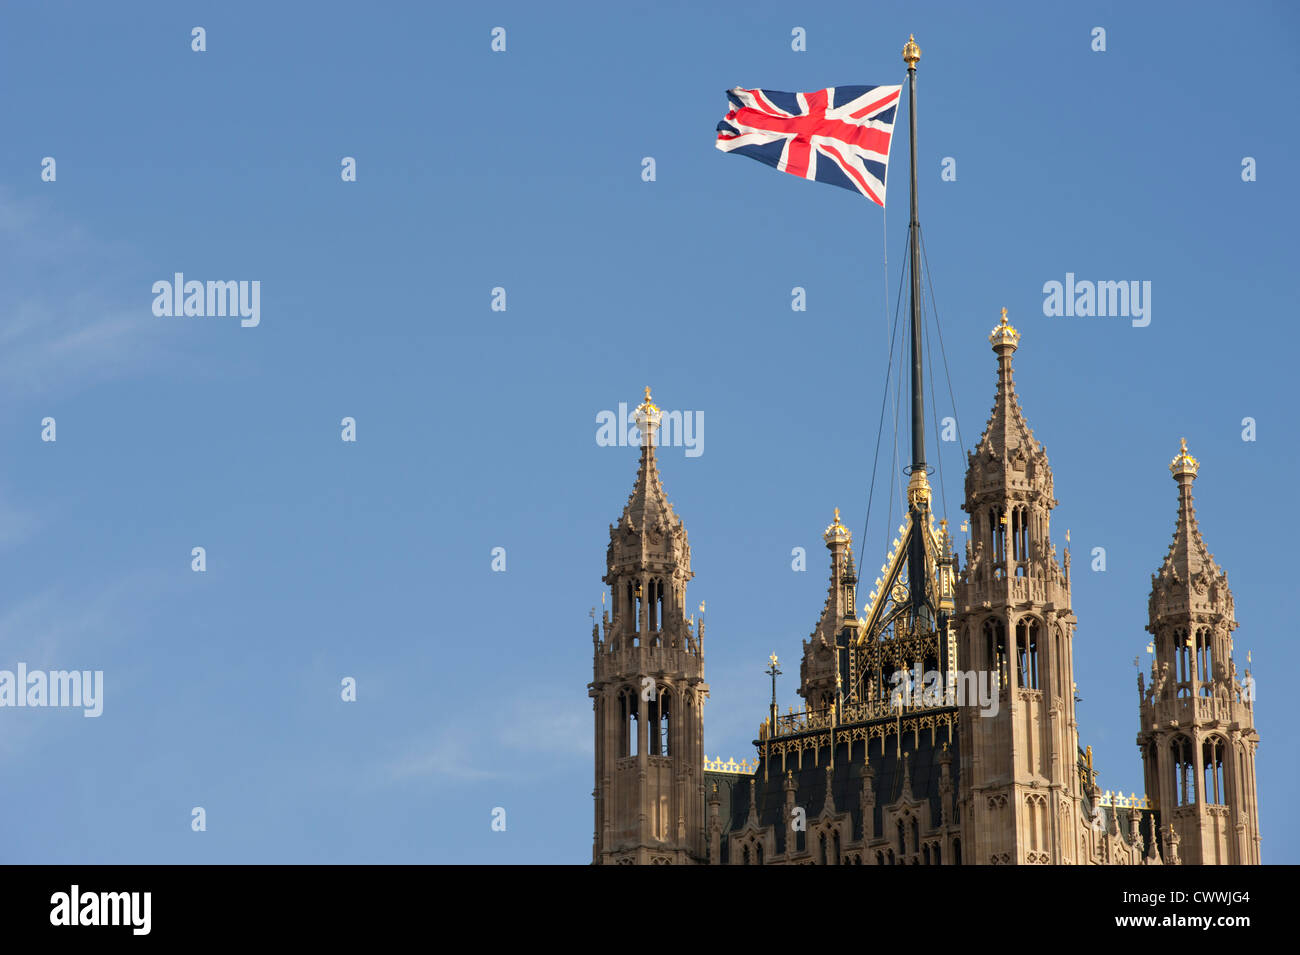 Der Anschluß-Markierungsfahne oder "Union Jack" hob über Victoria Tower am Palace of Westminster in London, England, UK. Stockfoto